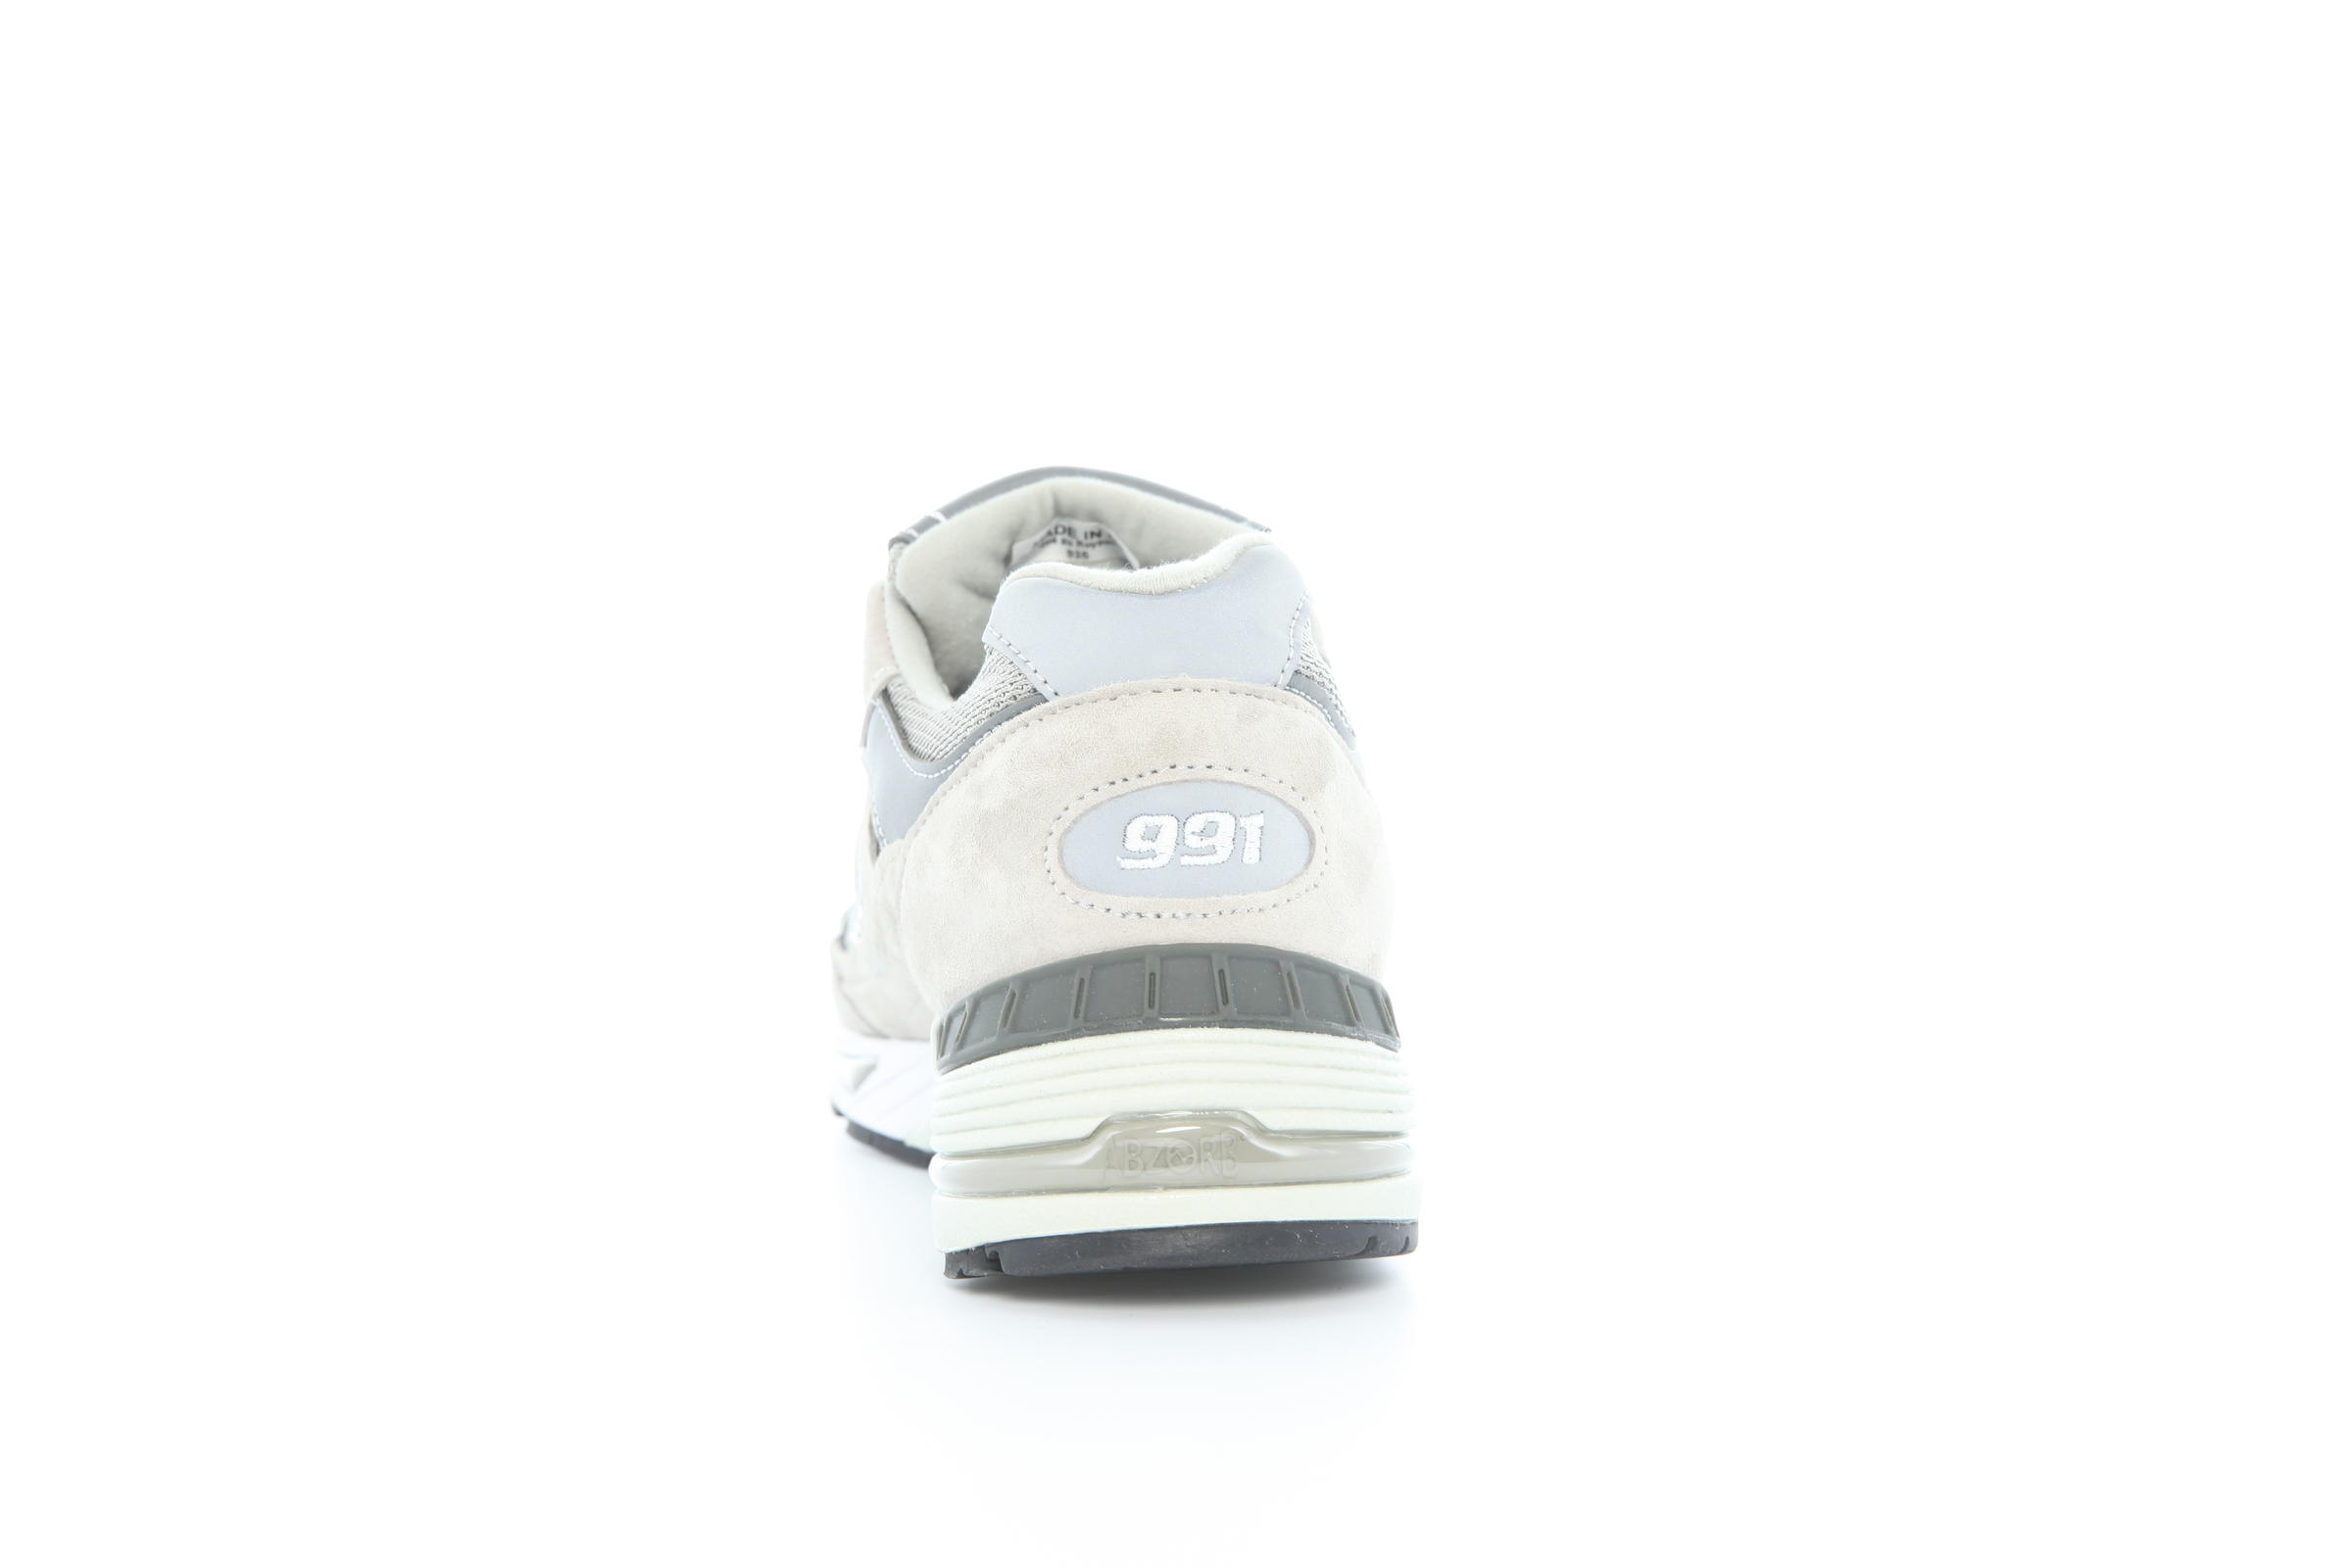 New Balance M 991 GL "Grey"